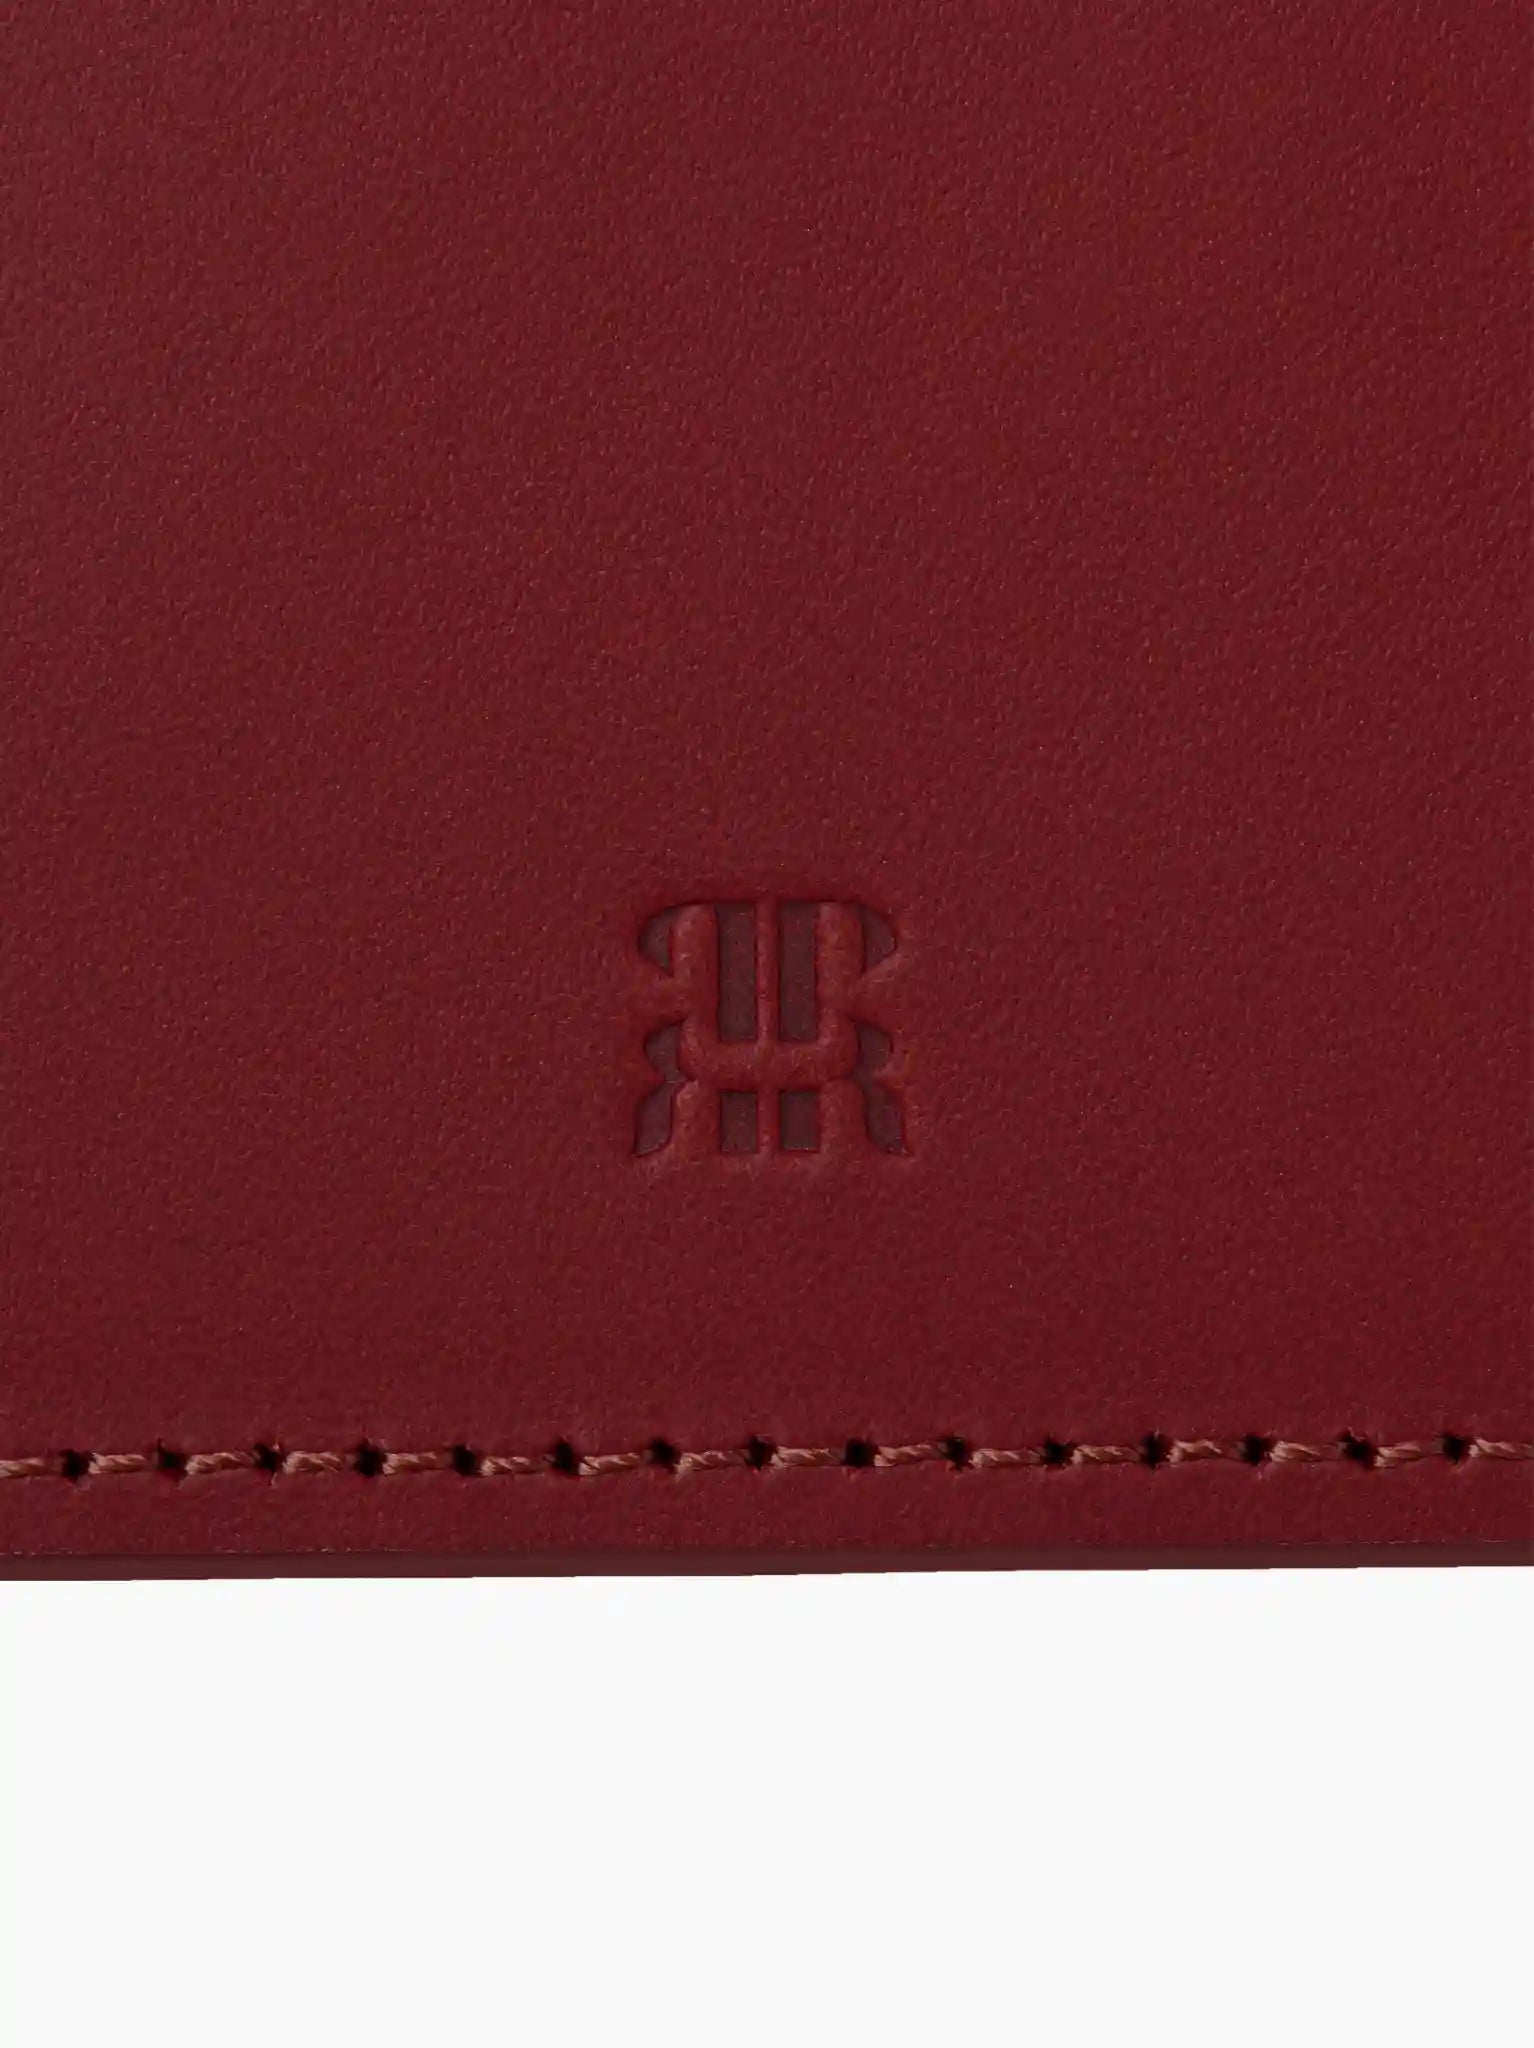 Red Leather Passport Holder